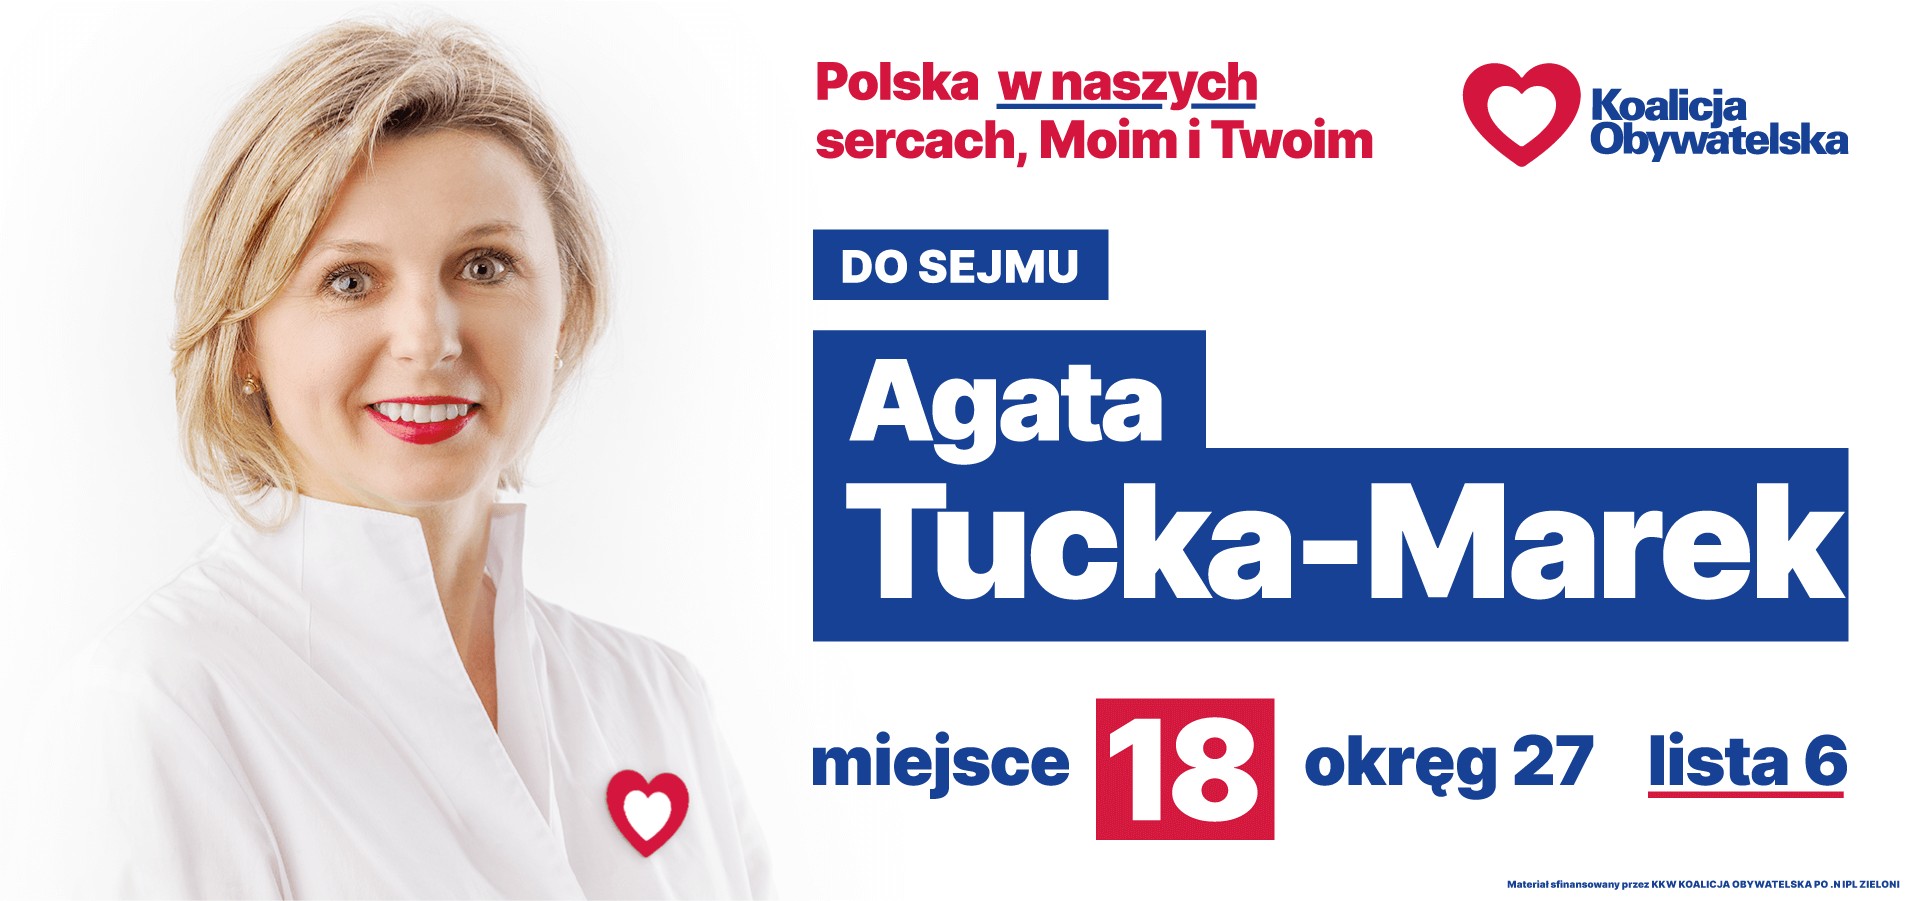 Agata Tucka- Marek